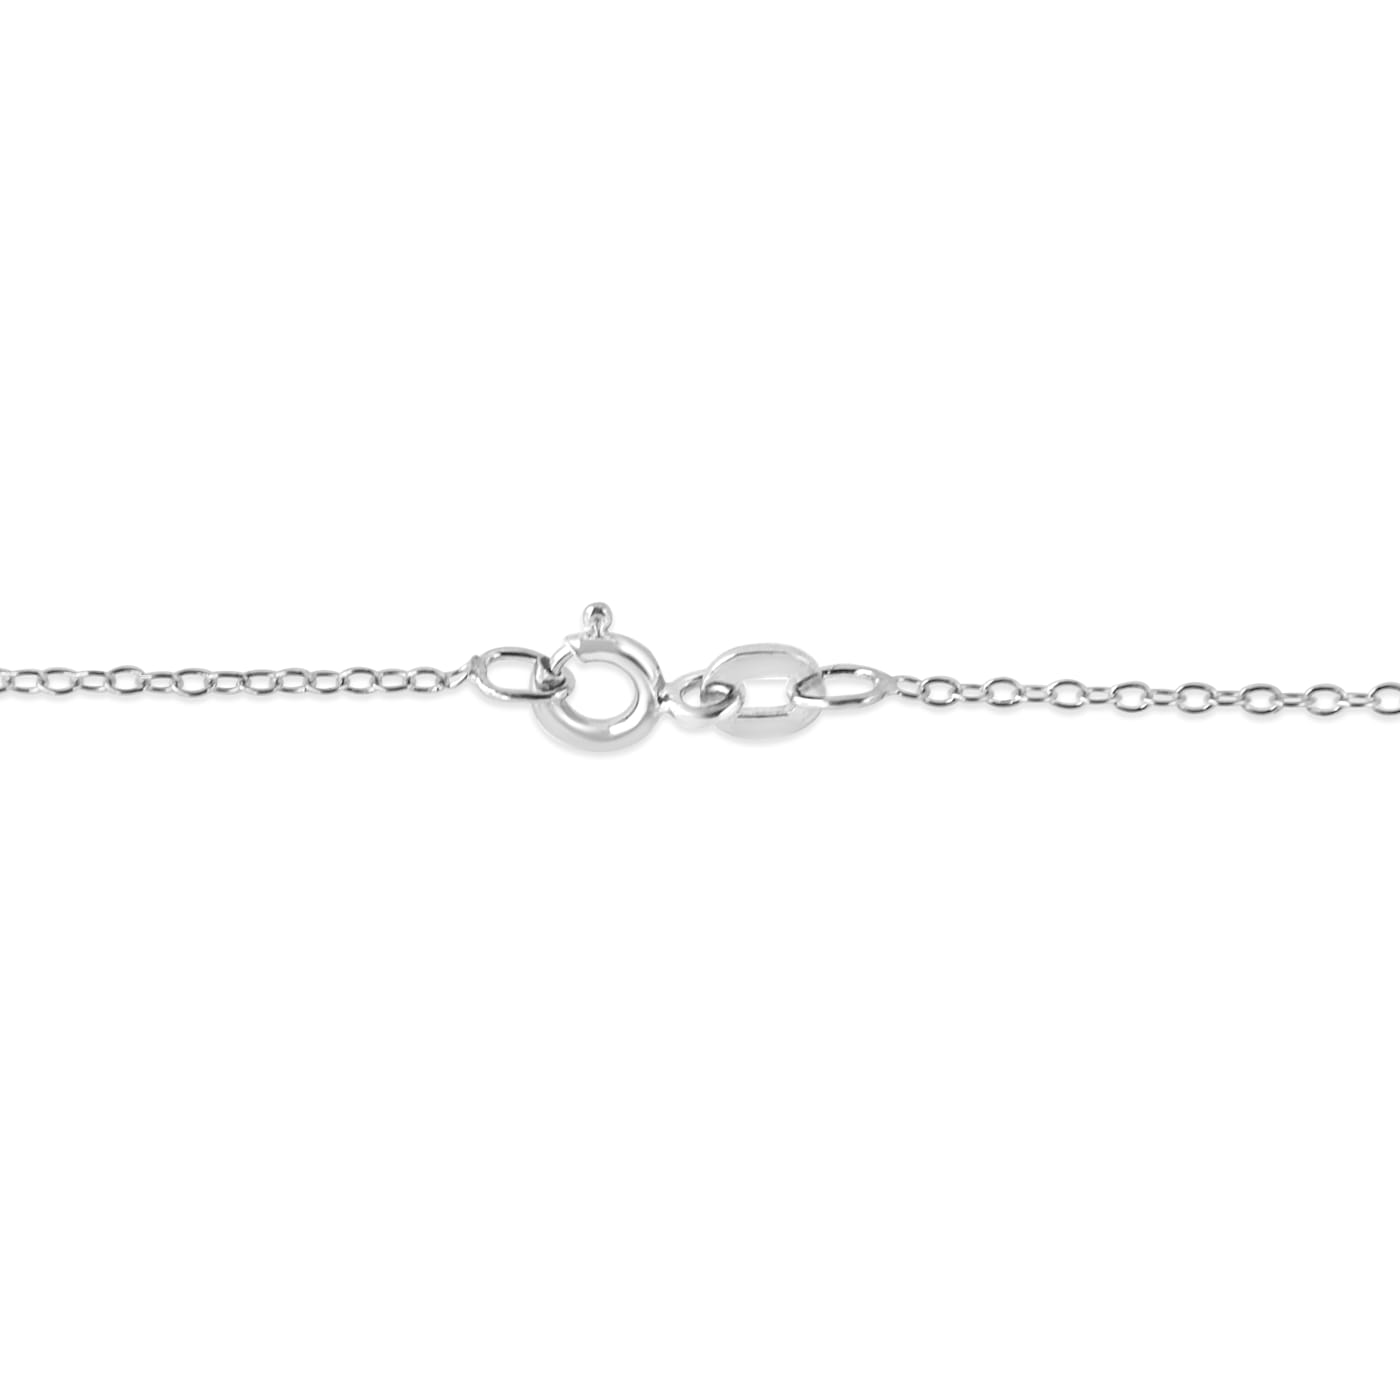 0.16ctw Diamond Cross Sterling Silver Pendant with Chain - 11QMKA